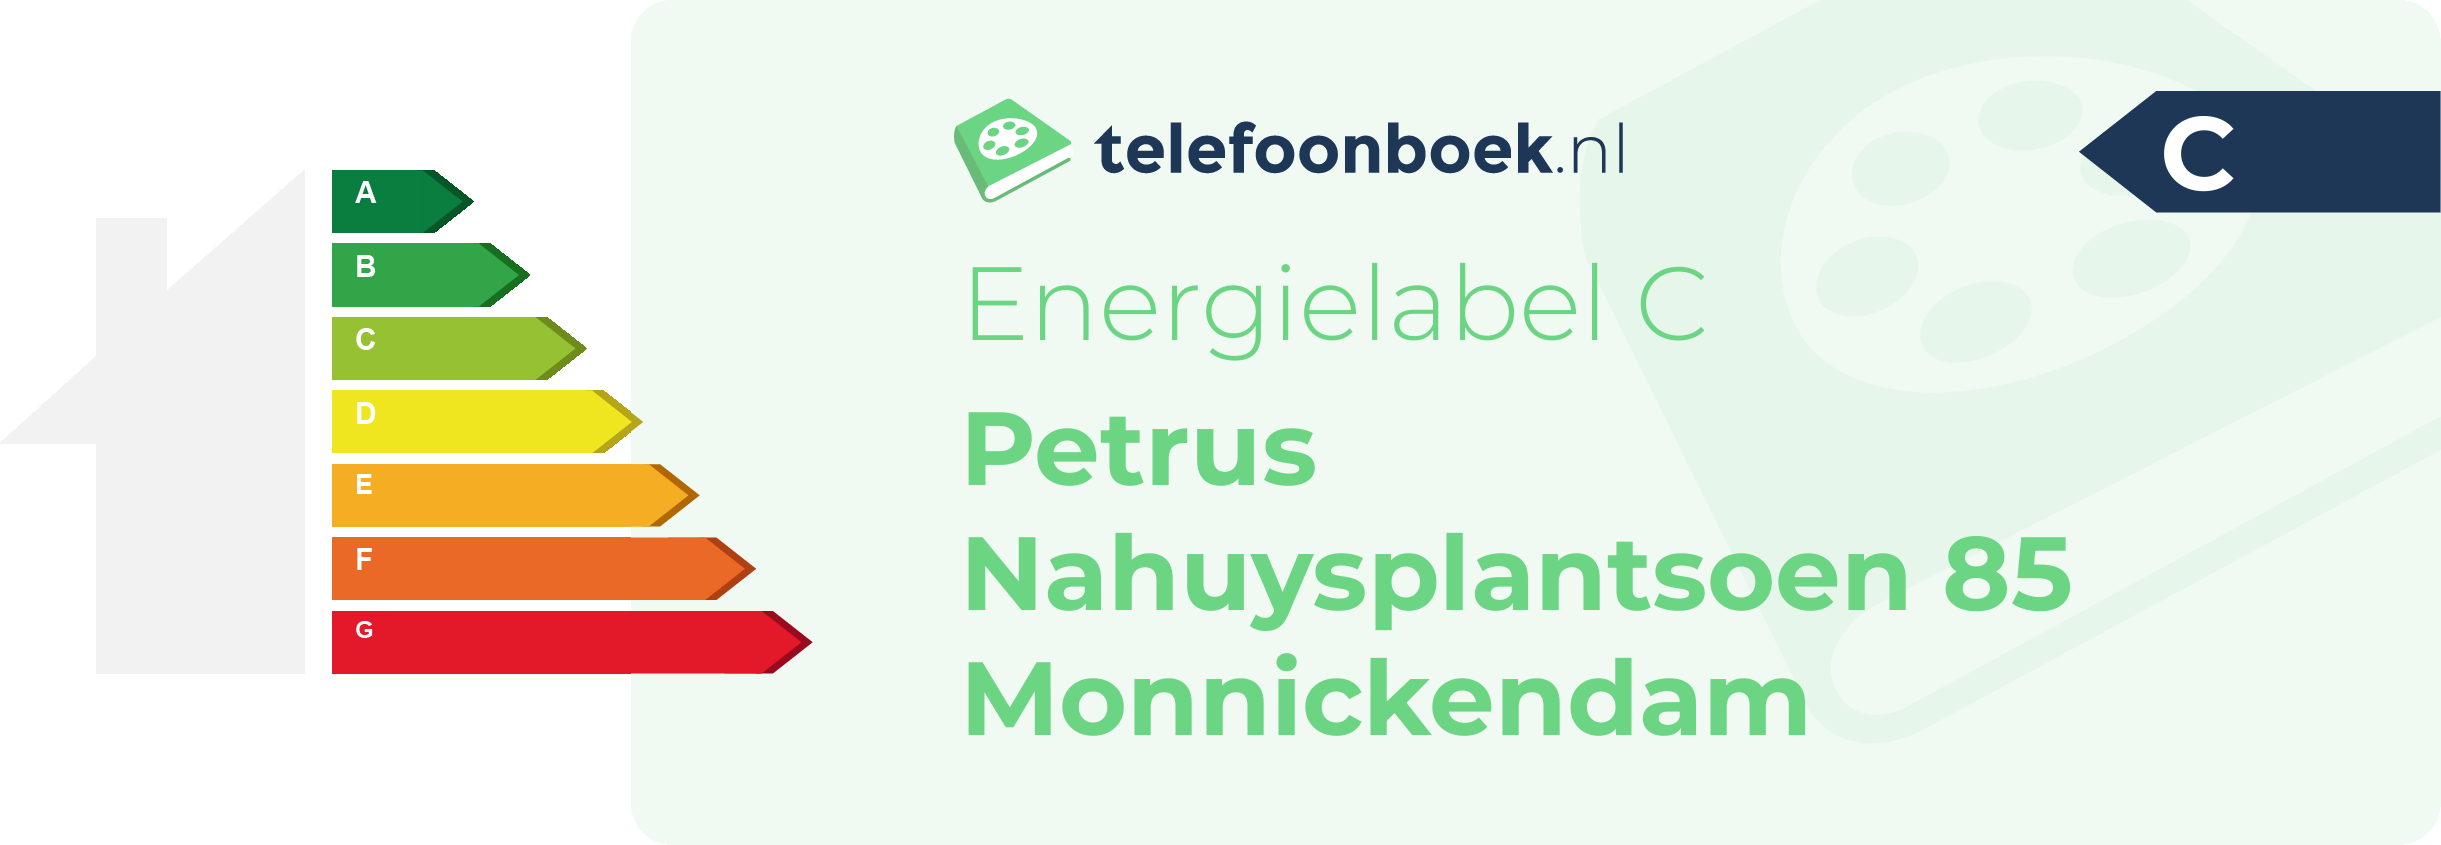 Energielabel Petrus Nahuysplantsoen 85 Monnickendam